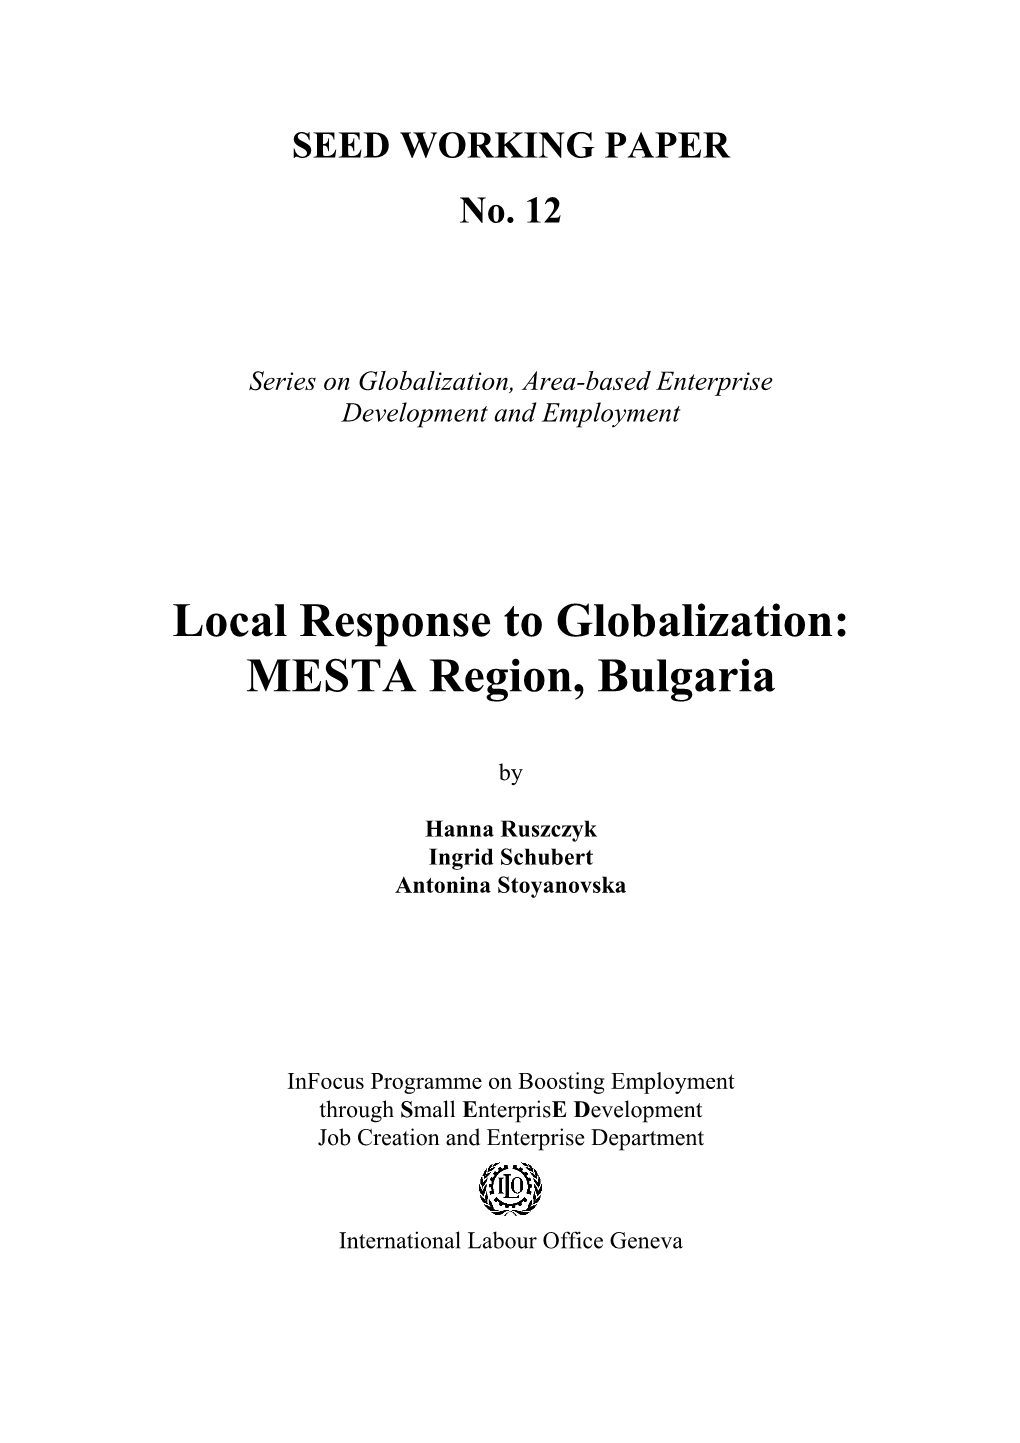 Local Response to Globalization: MESTA Region, Bulgaria